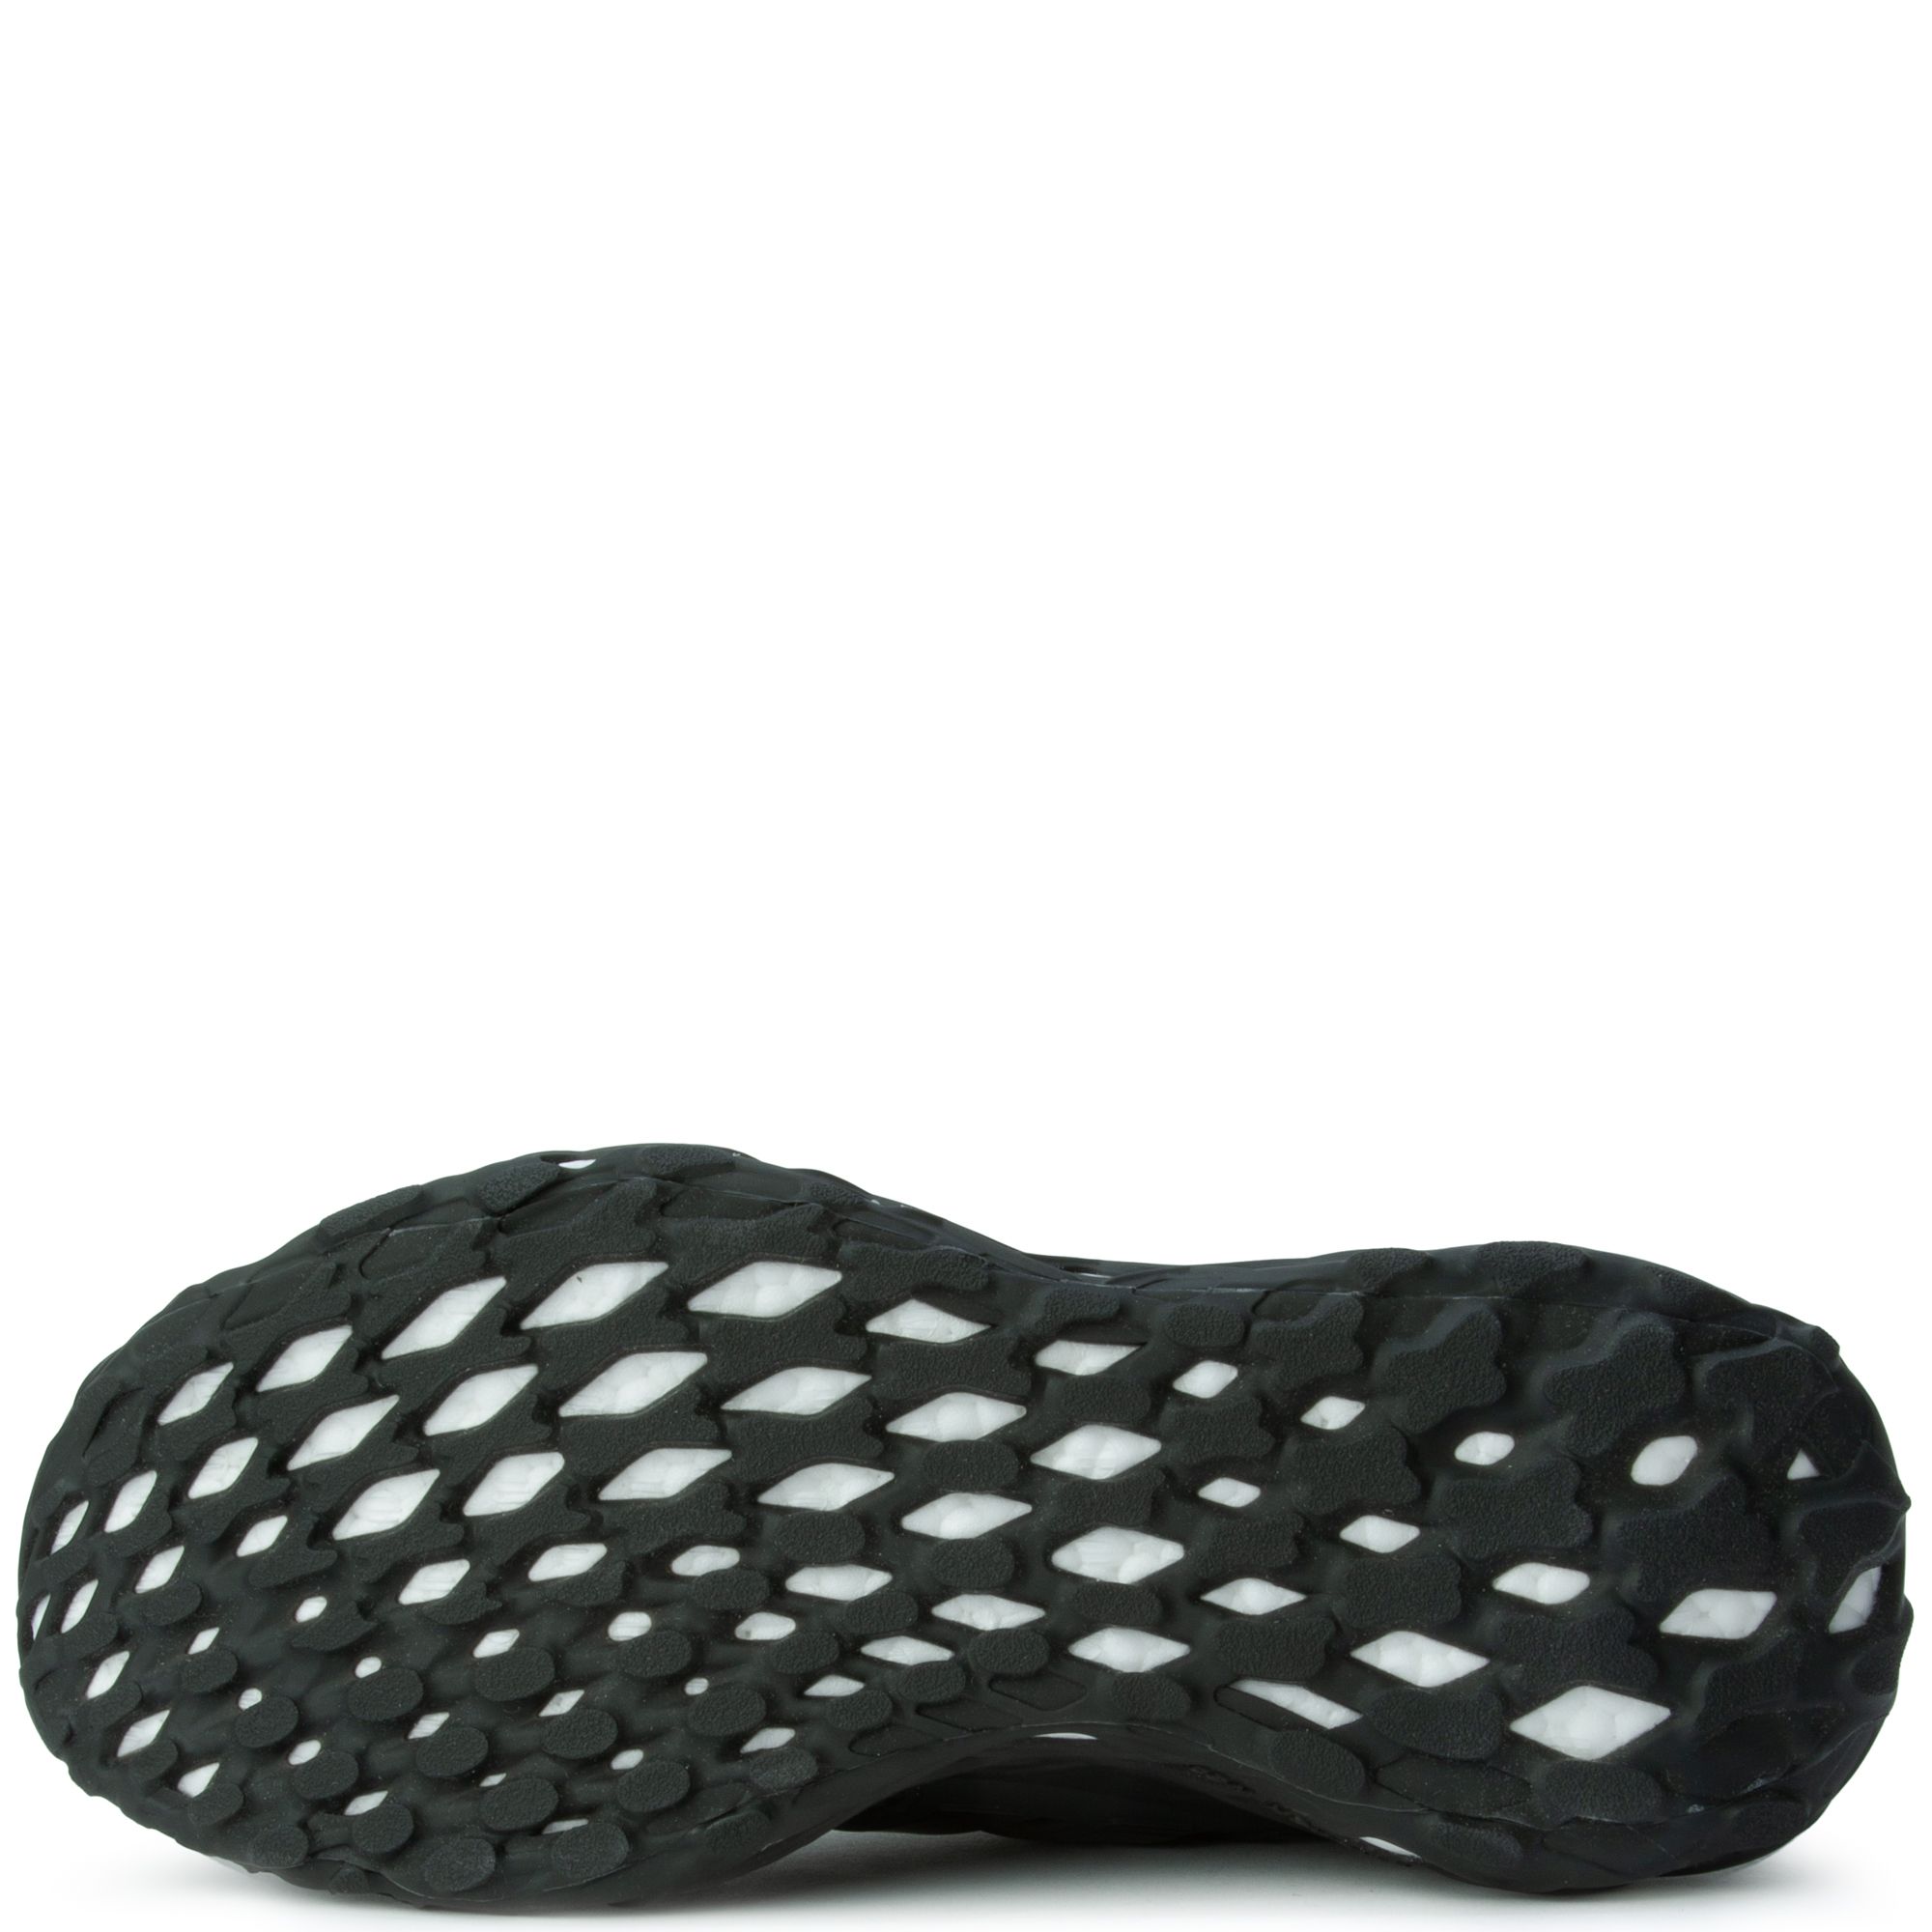 Adidas UltraBoost Web DNA Black Carbon GY4173  Sneakers men fashion, All  black sneakers, Adidas sneakers